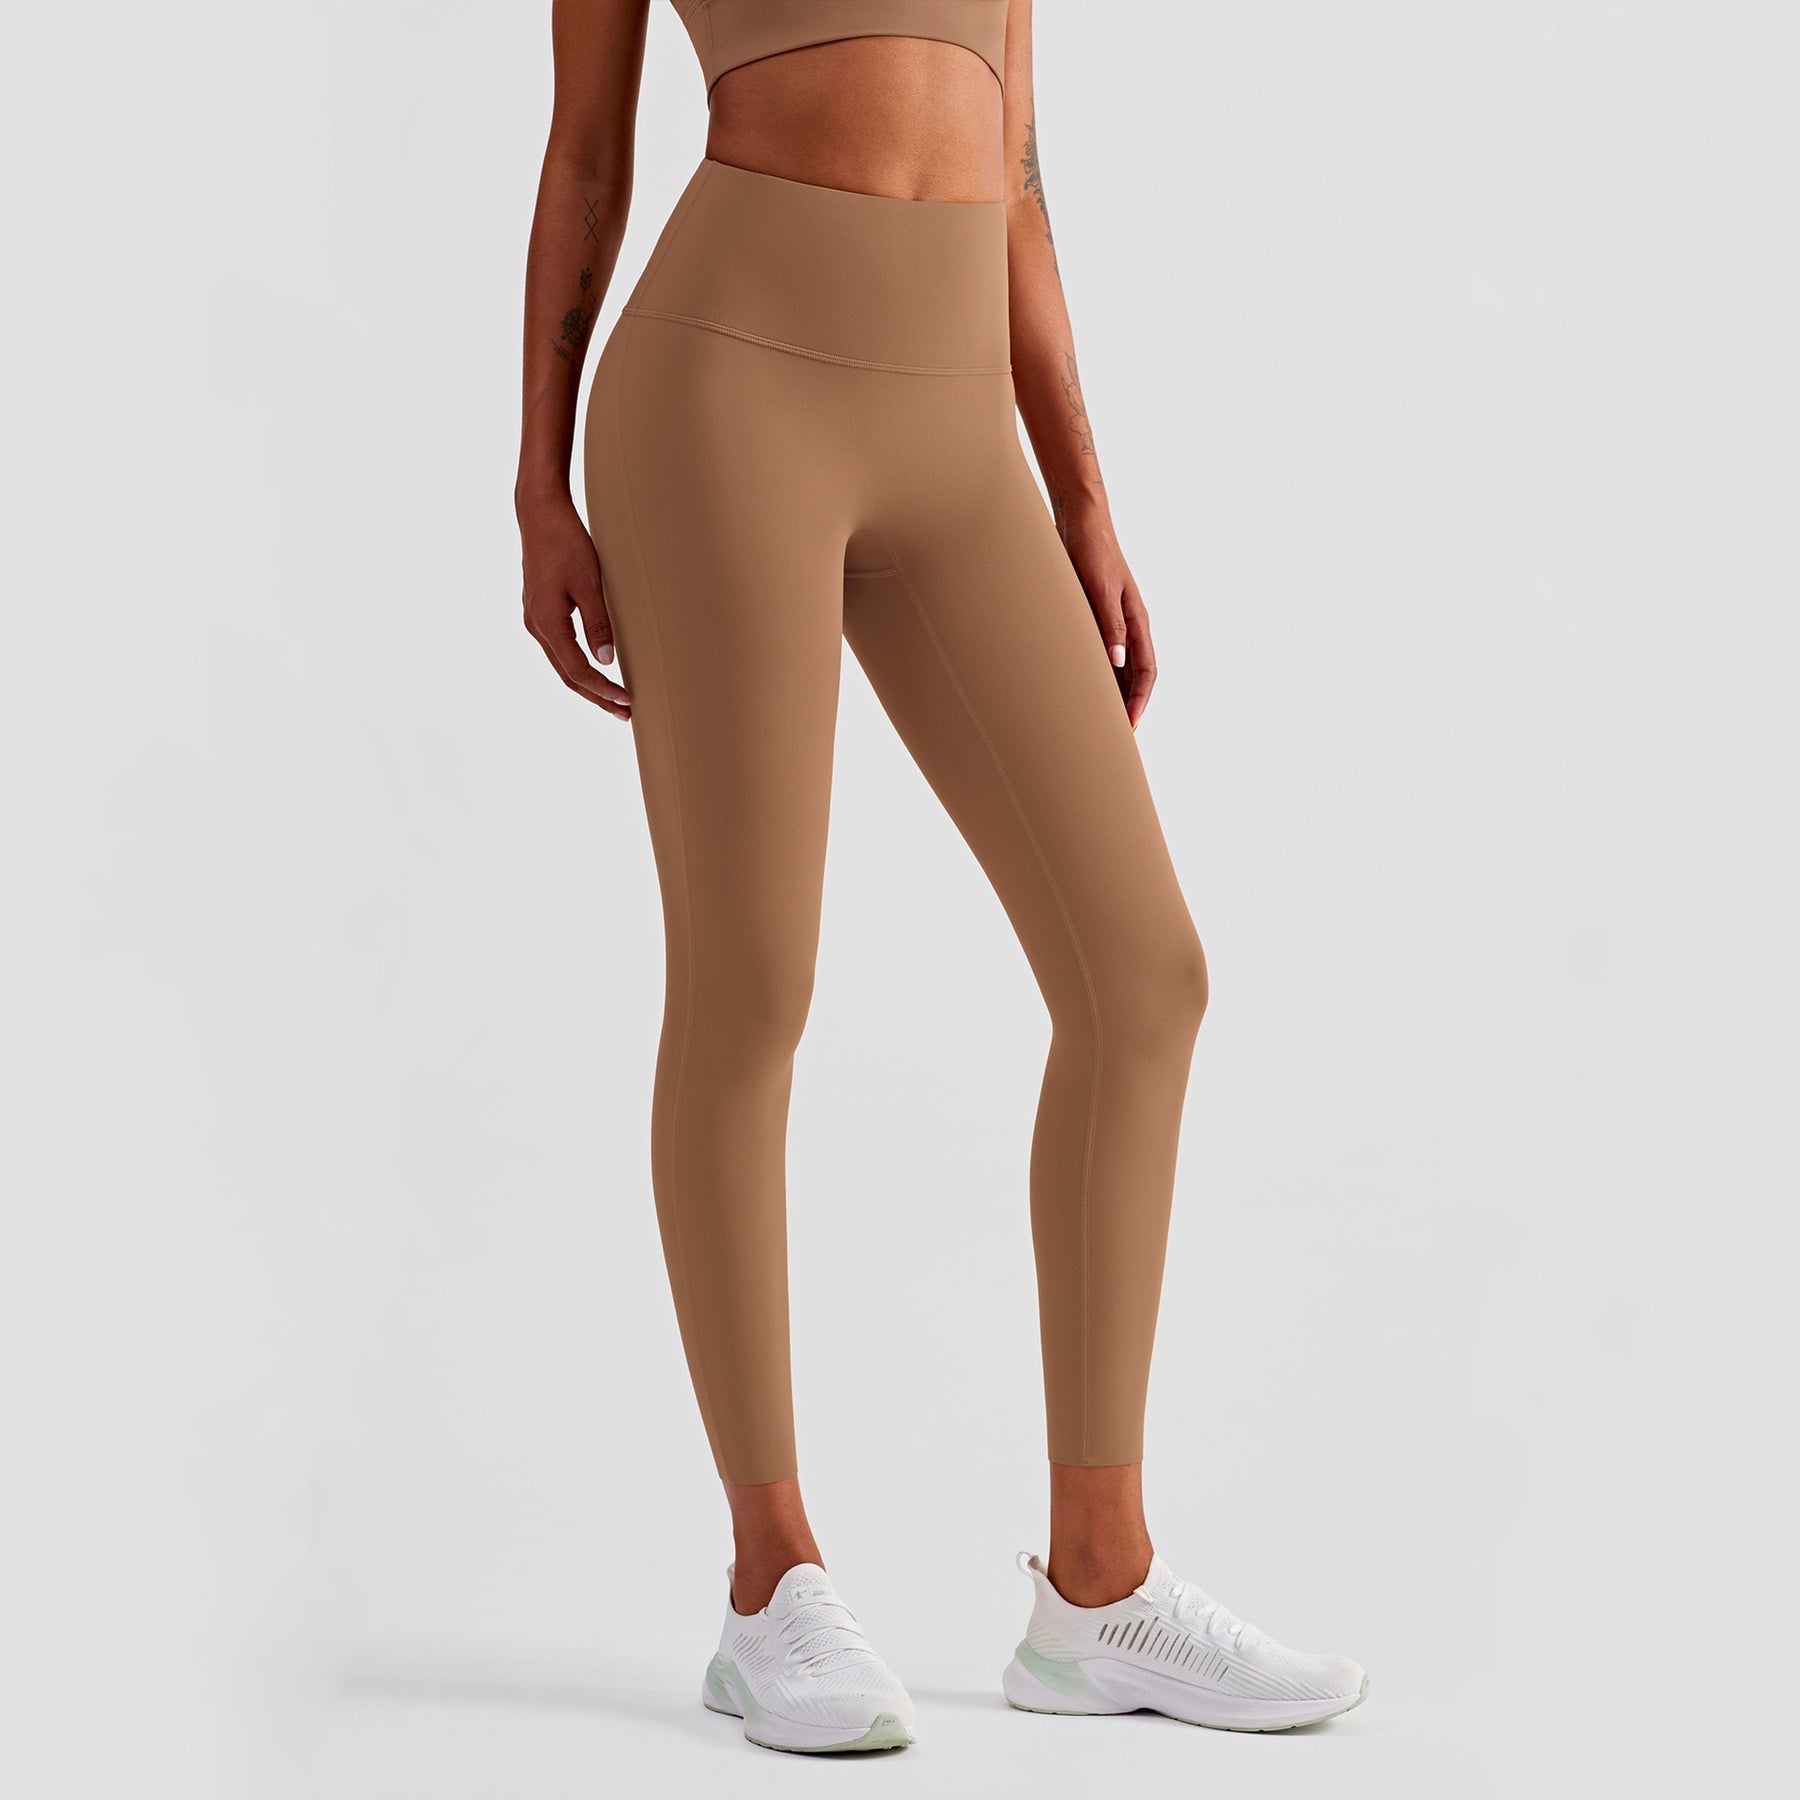 New Lycra Peach Buttocks Leggings Women Yoga Pants Nude High Waist Fitness Leggins Push Up Tights Woman Gym Sports Running Pants